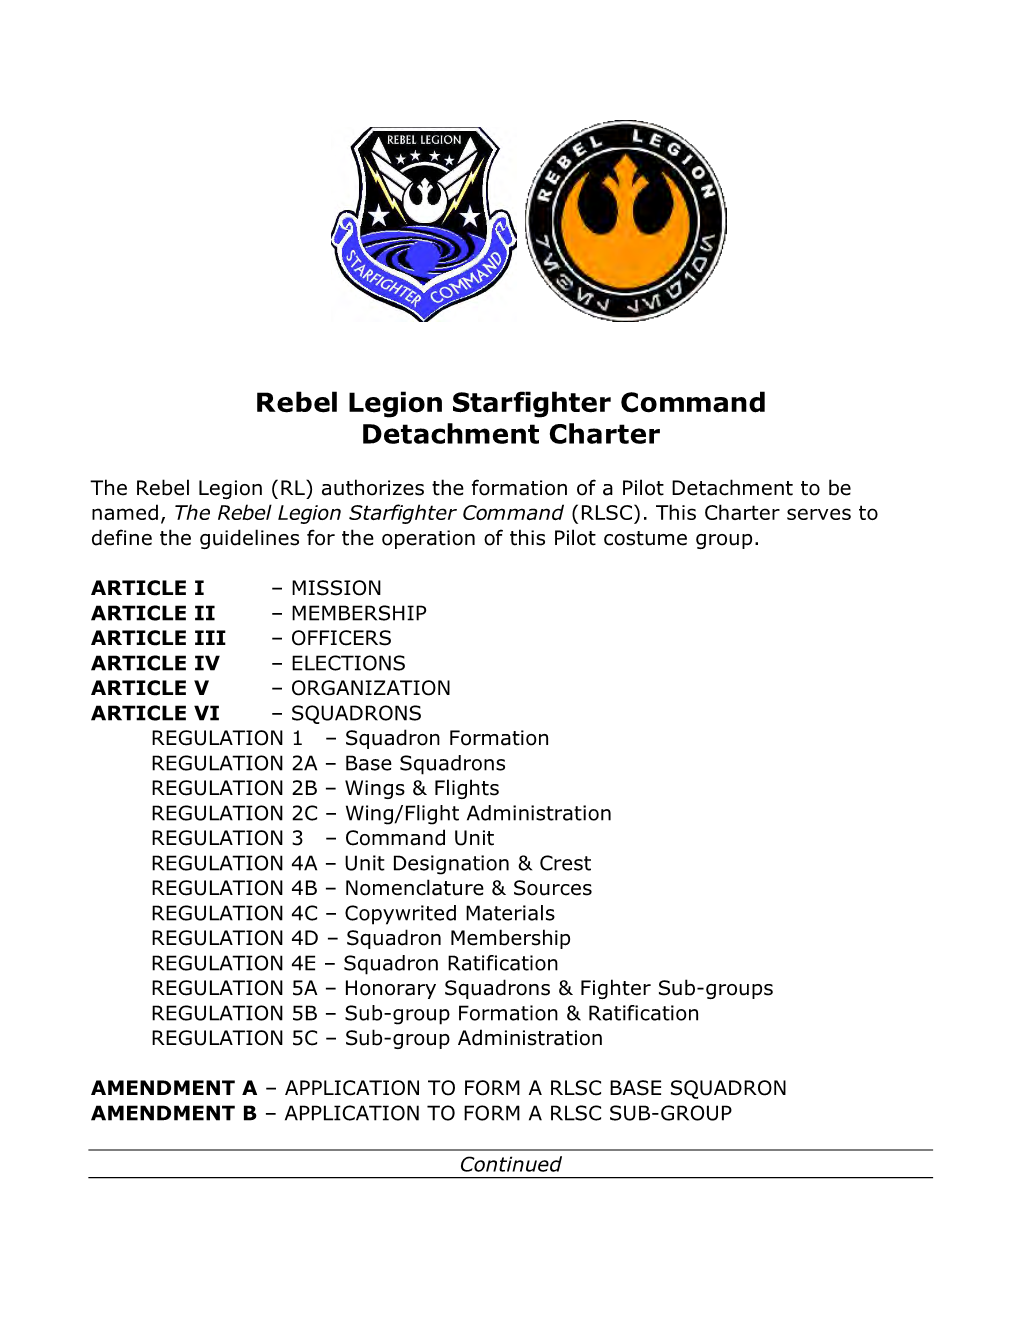 Rebel Legion Starfighter Command Detachment Charter